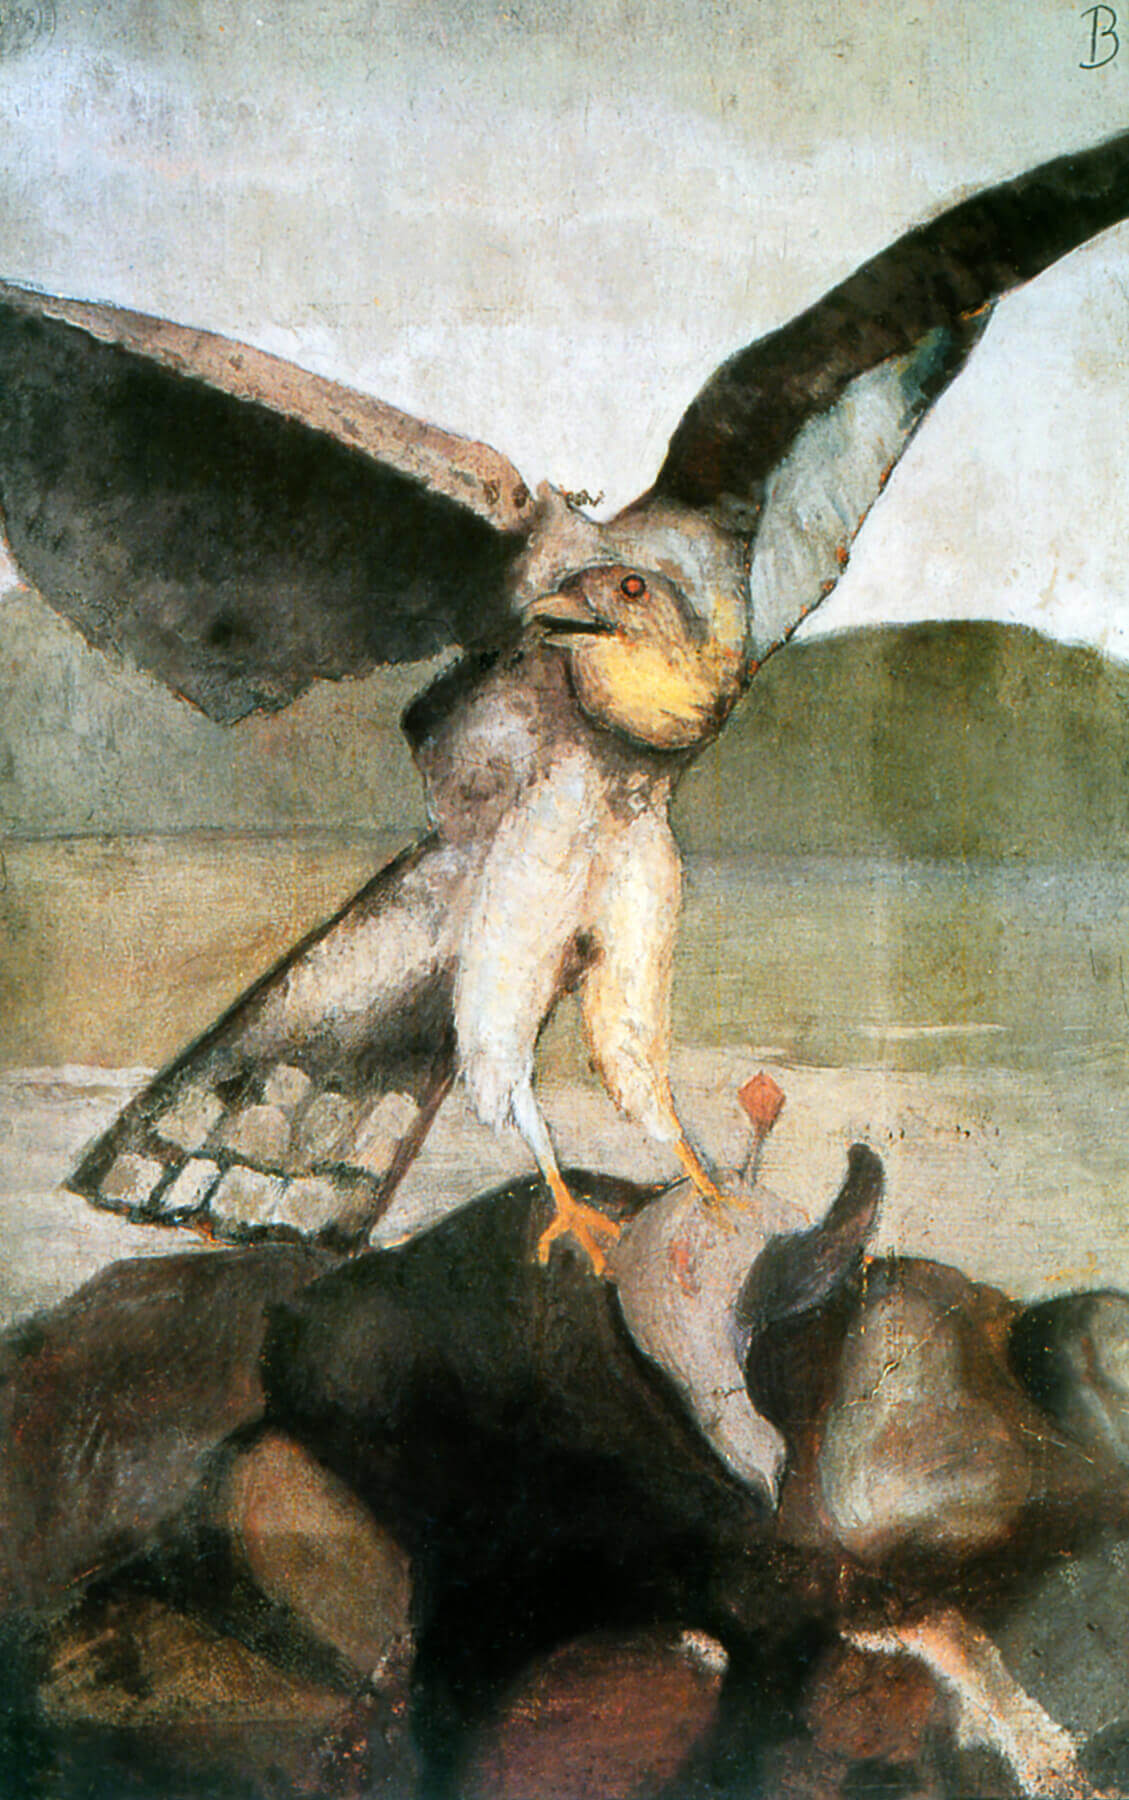 Art Canada Institute, Paul-Émile Borduas, Study of a Sparrow Hawk in a Decorative Landscape, c. 1923–24